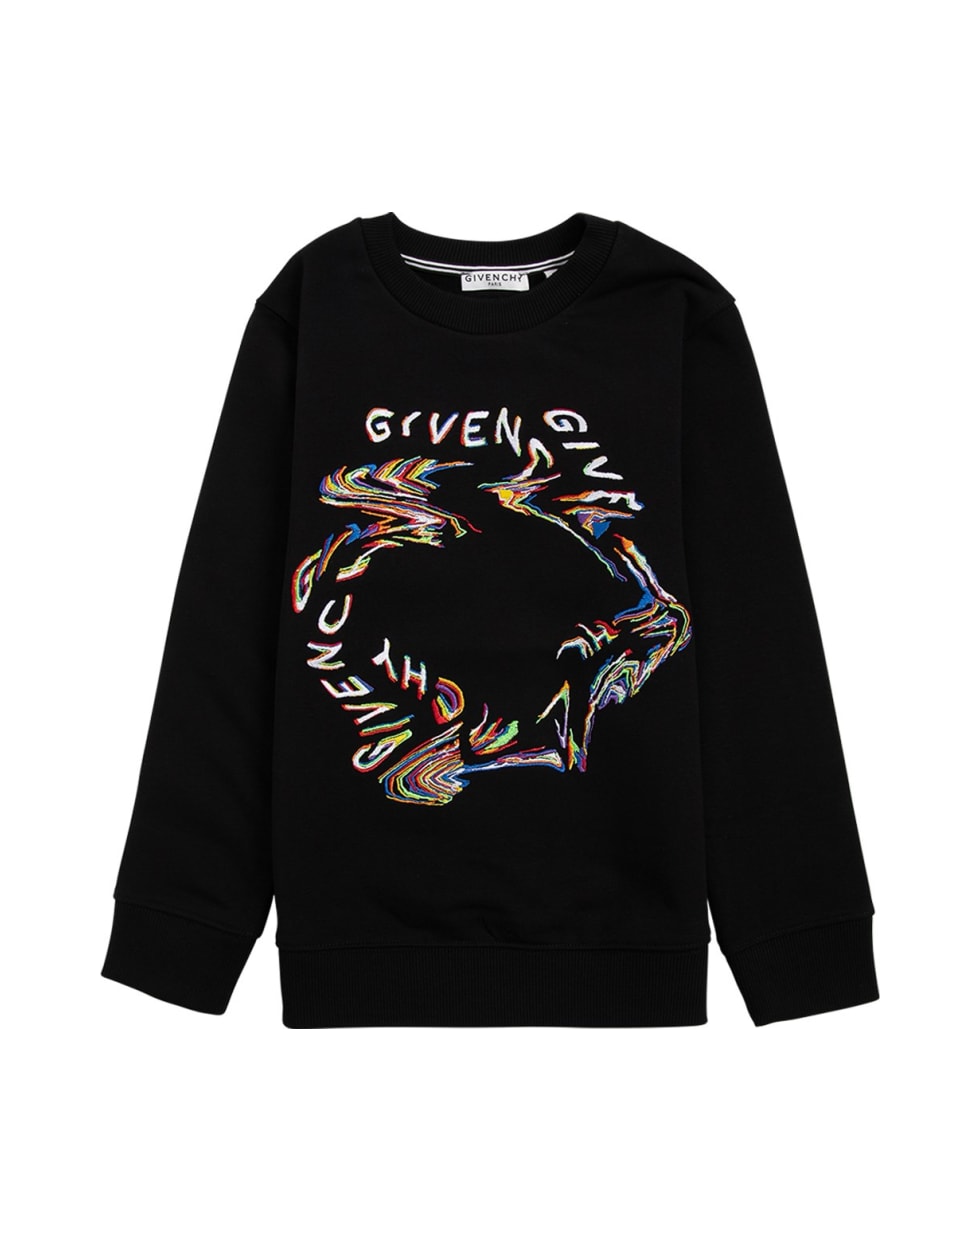 Givenchy Black Cotton Sweatshirt With Print - Black